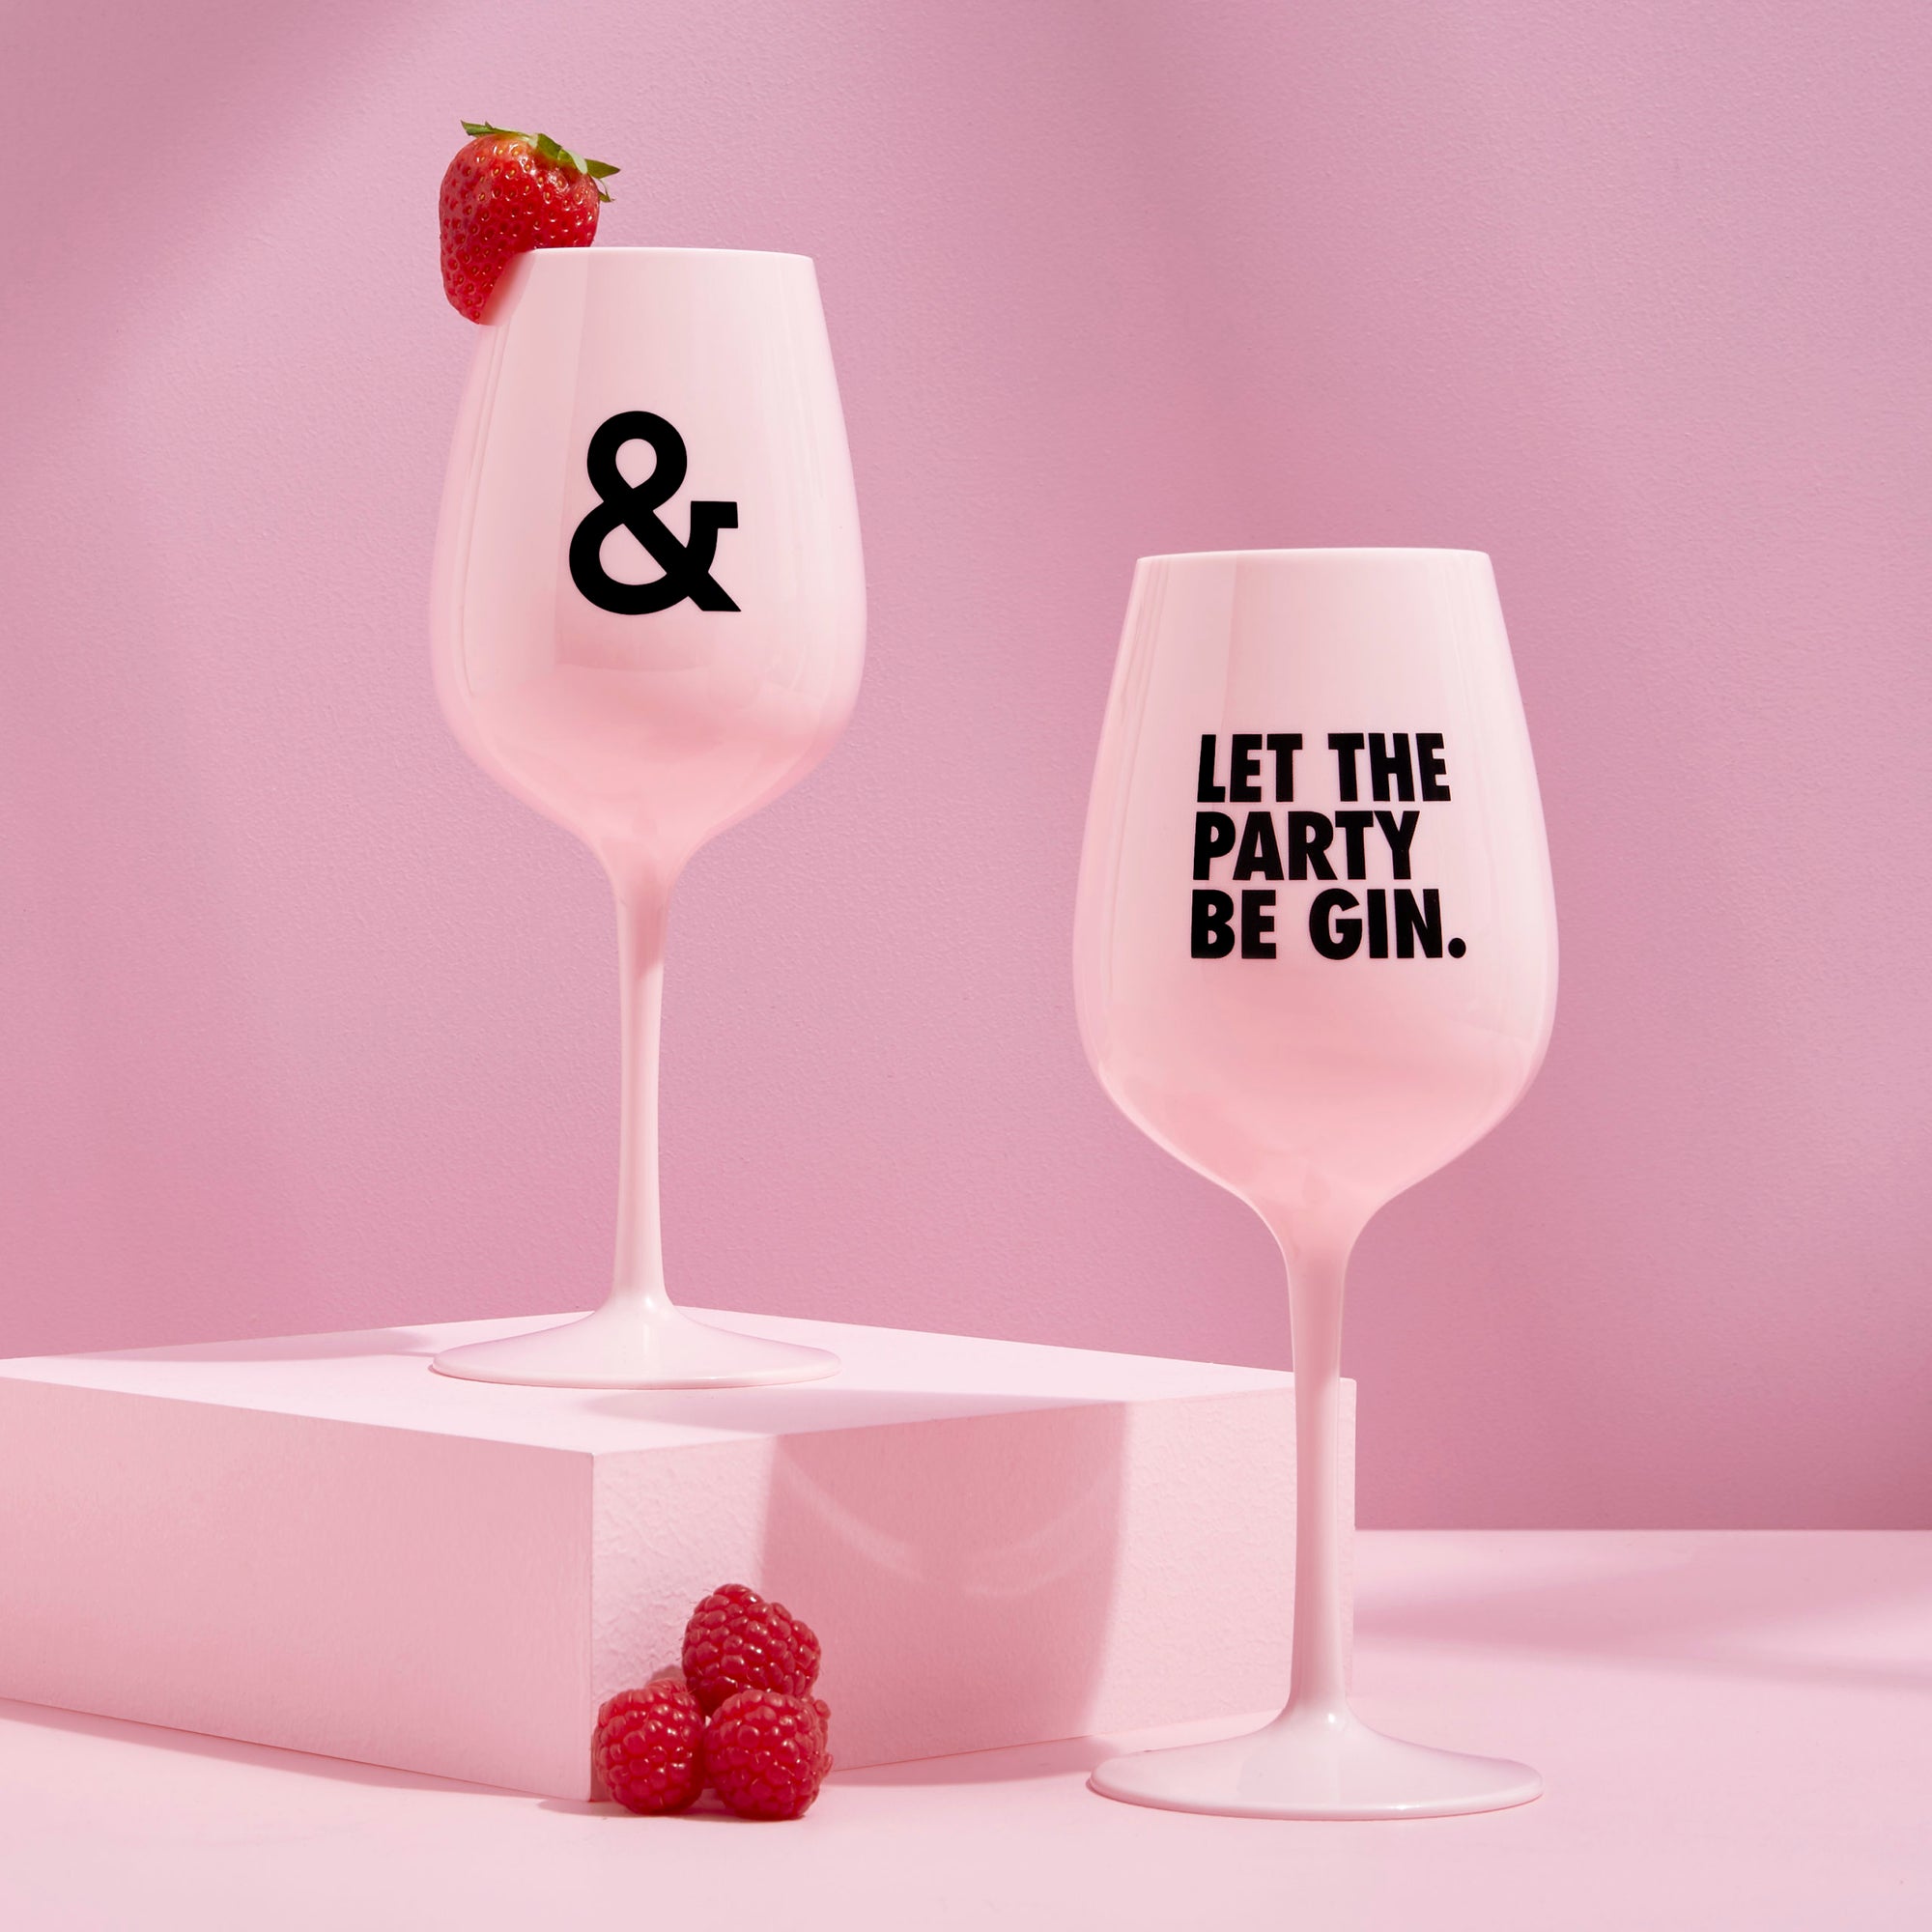 Pink Gin & Gift Pack ft. 2 oversized spritz glasses